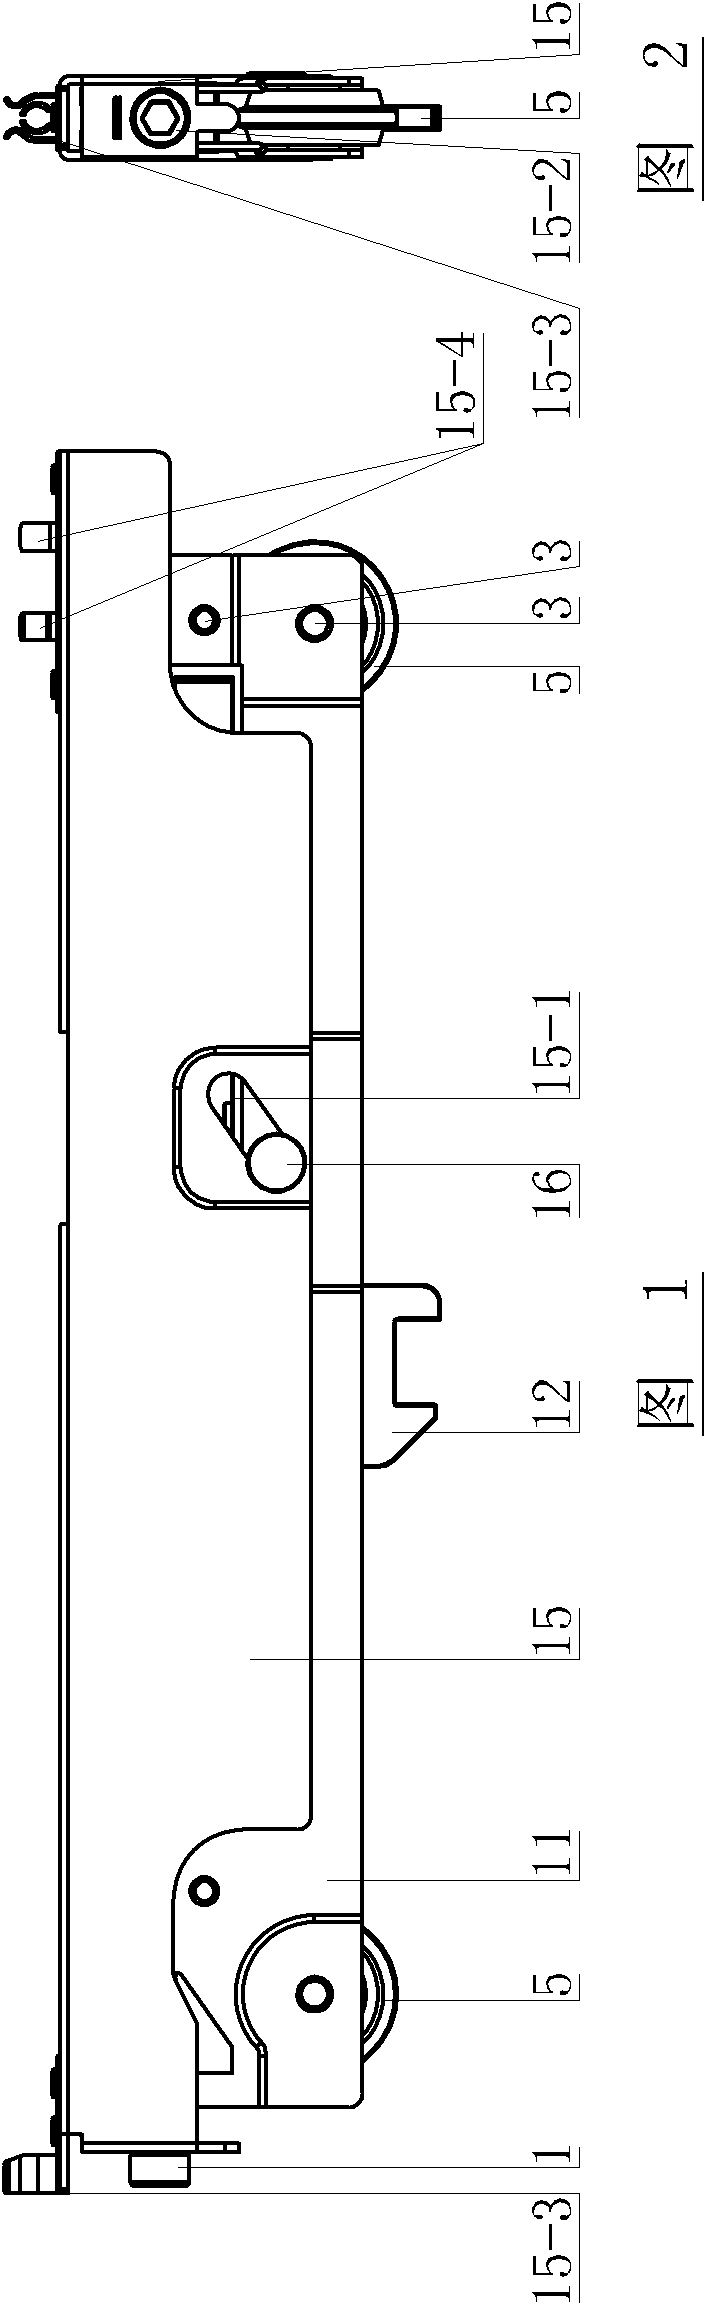 Damper-including sliding wheel assembly under wall cabinet door